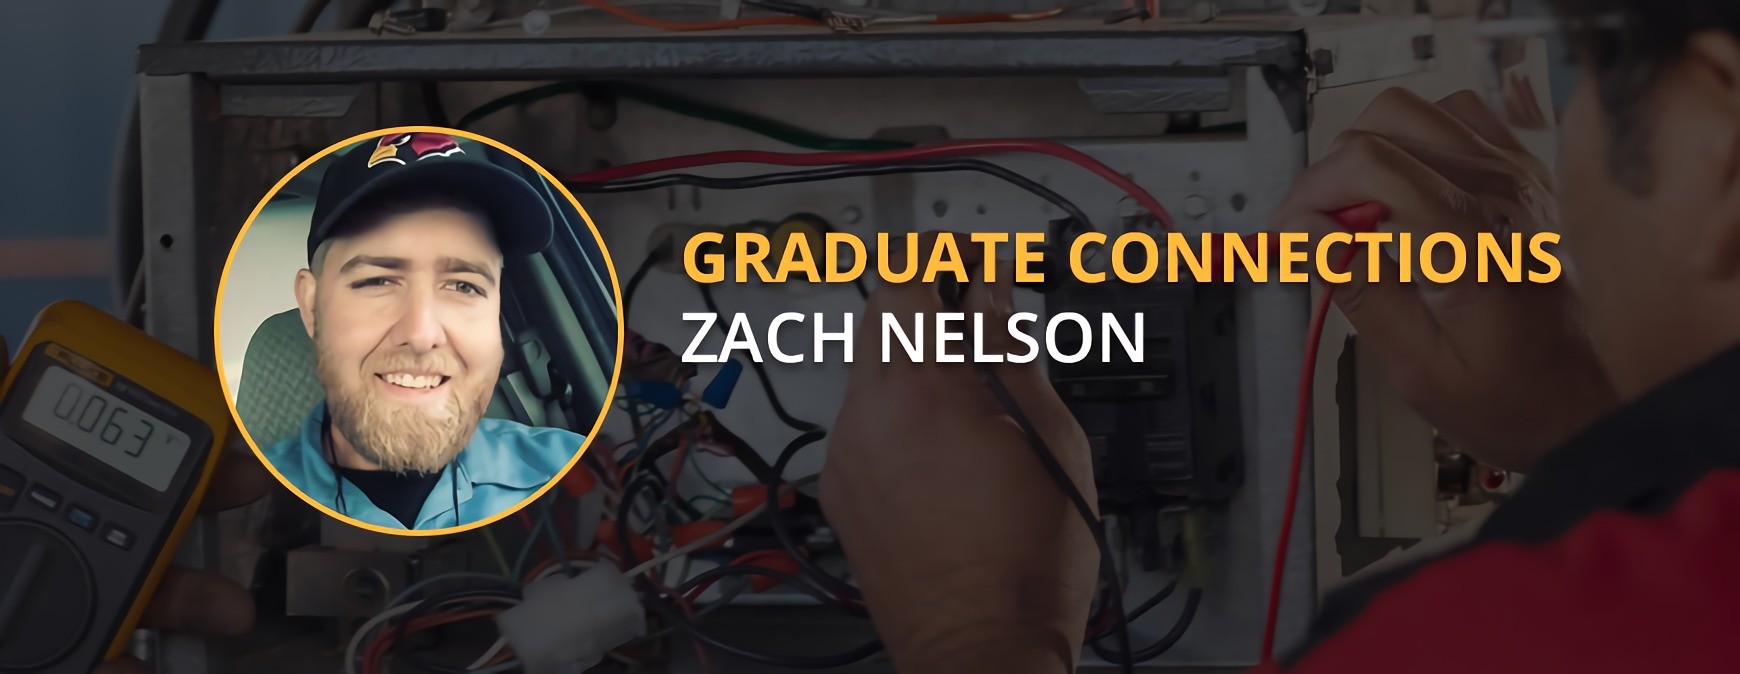 Graduate Connections - Meet Zach Nelson - Refrigeration School, Inc. (RSI)